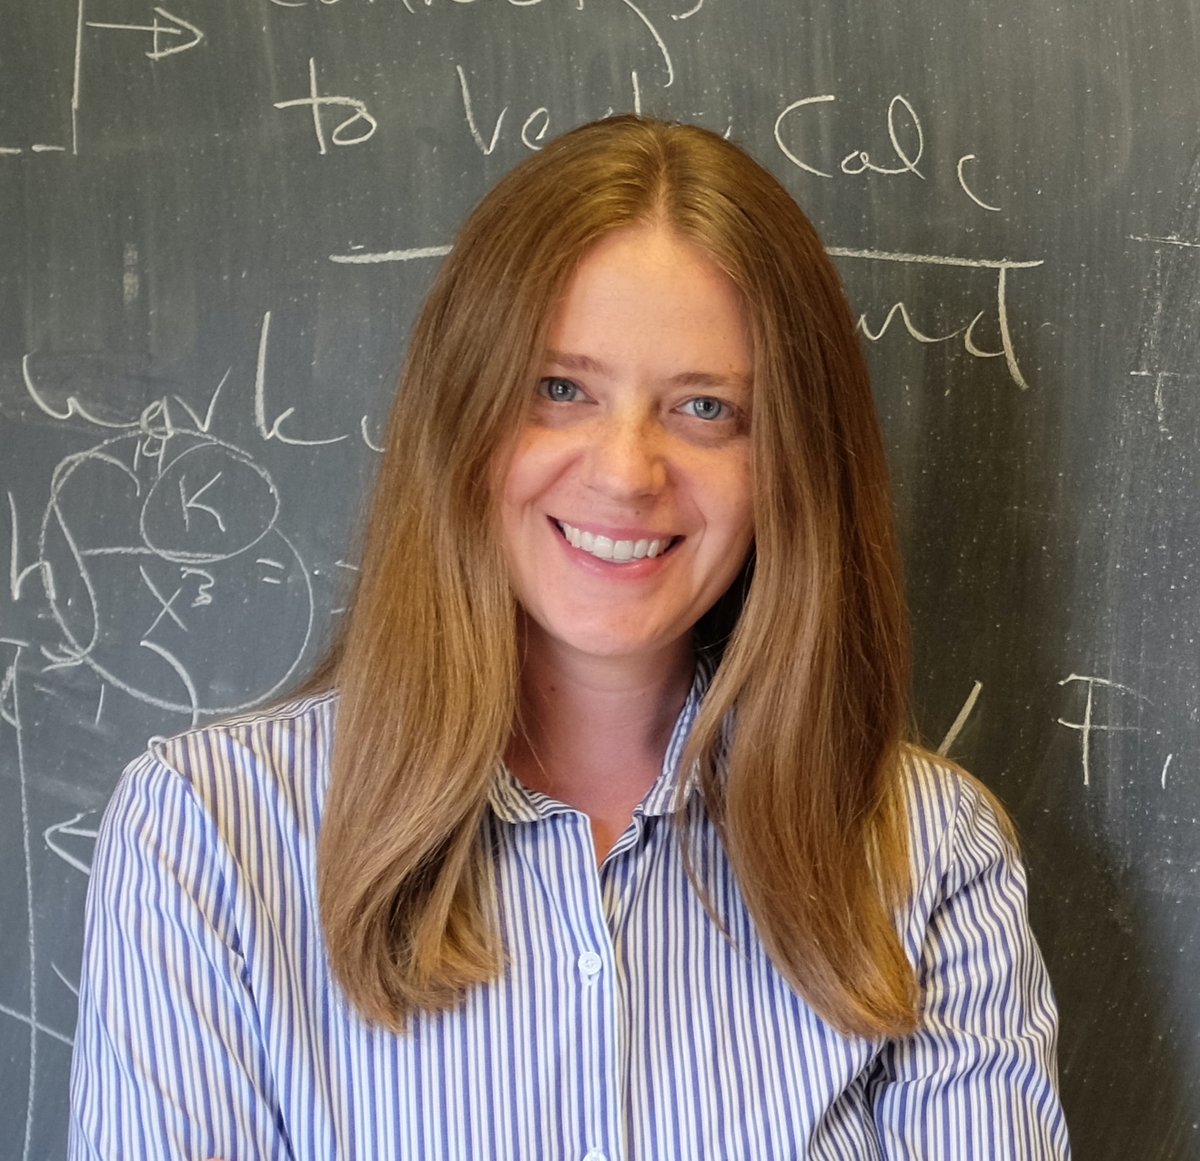 Caroline J. Klivans, Ph.D. is a Mid-Career Research Achievement Award recipient. Klivans specializes in algebraic, geometric, and topological combinatorics. Learn more ➡️ bit.ly/49T9bcv